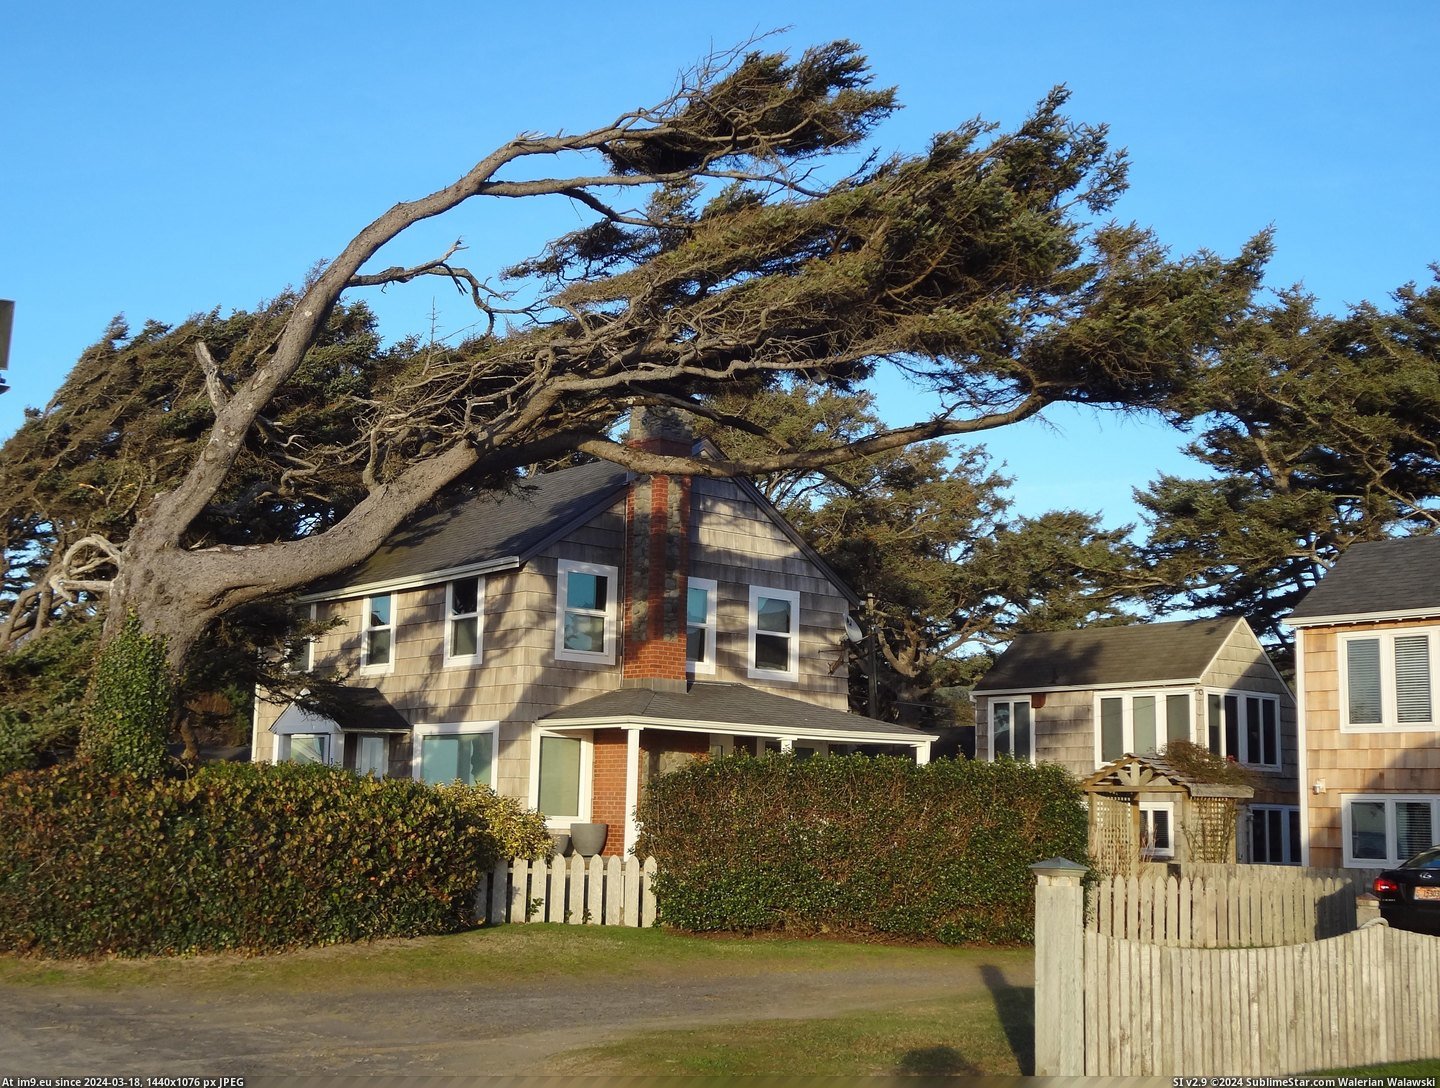 #Beach #Tree #Cannon #Winds #Constant #Oregon #Ocean #Shaped [Mildlyinteresting] Constant ocean winds have shaped this tree in Cannon Beach, Oregon. Pic. (Bild von album My r/MILDLYINTERESTING favs))